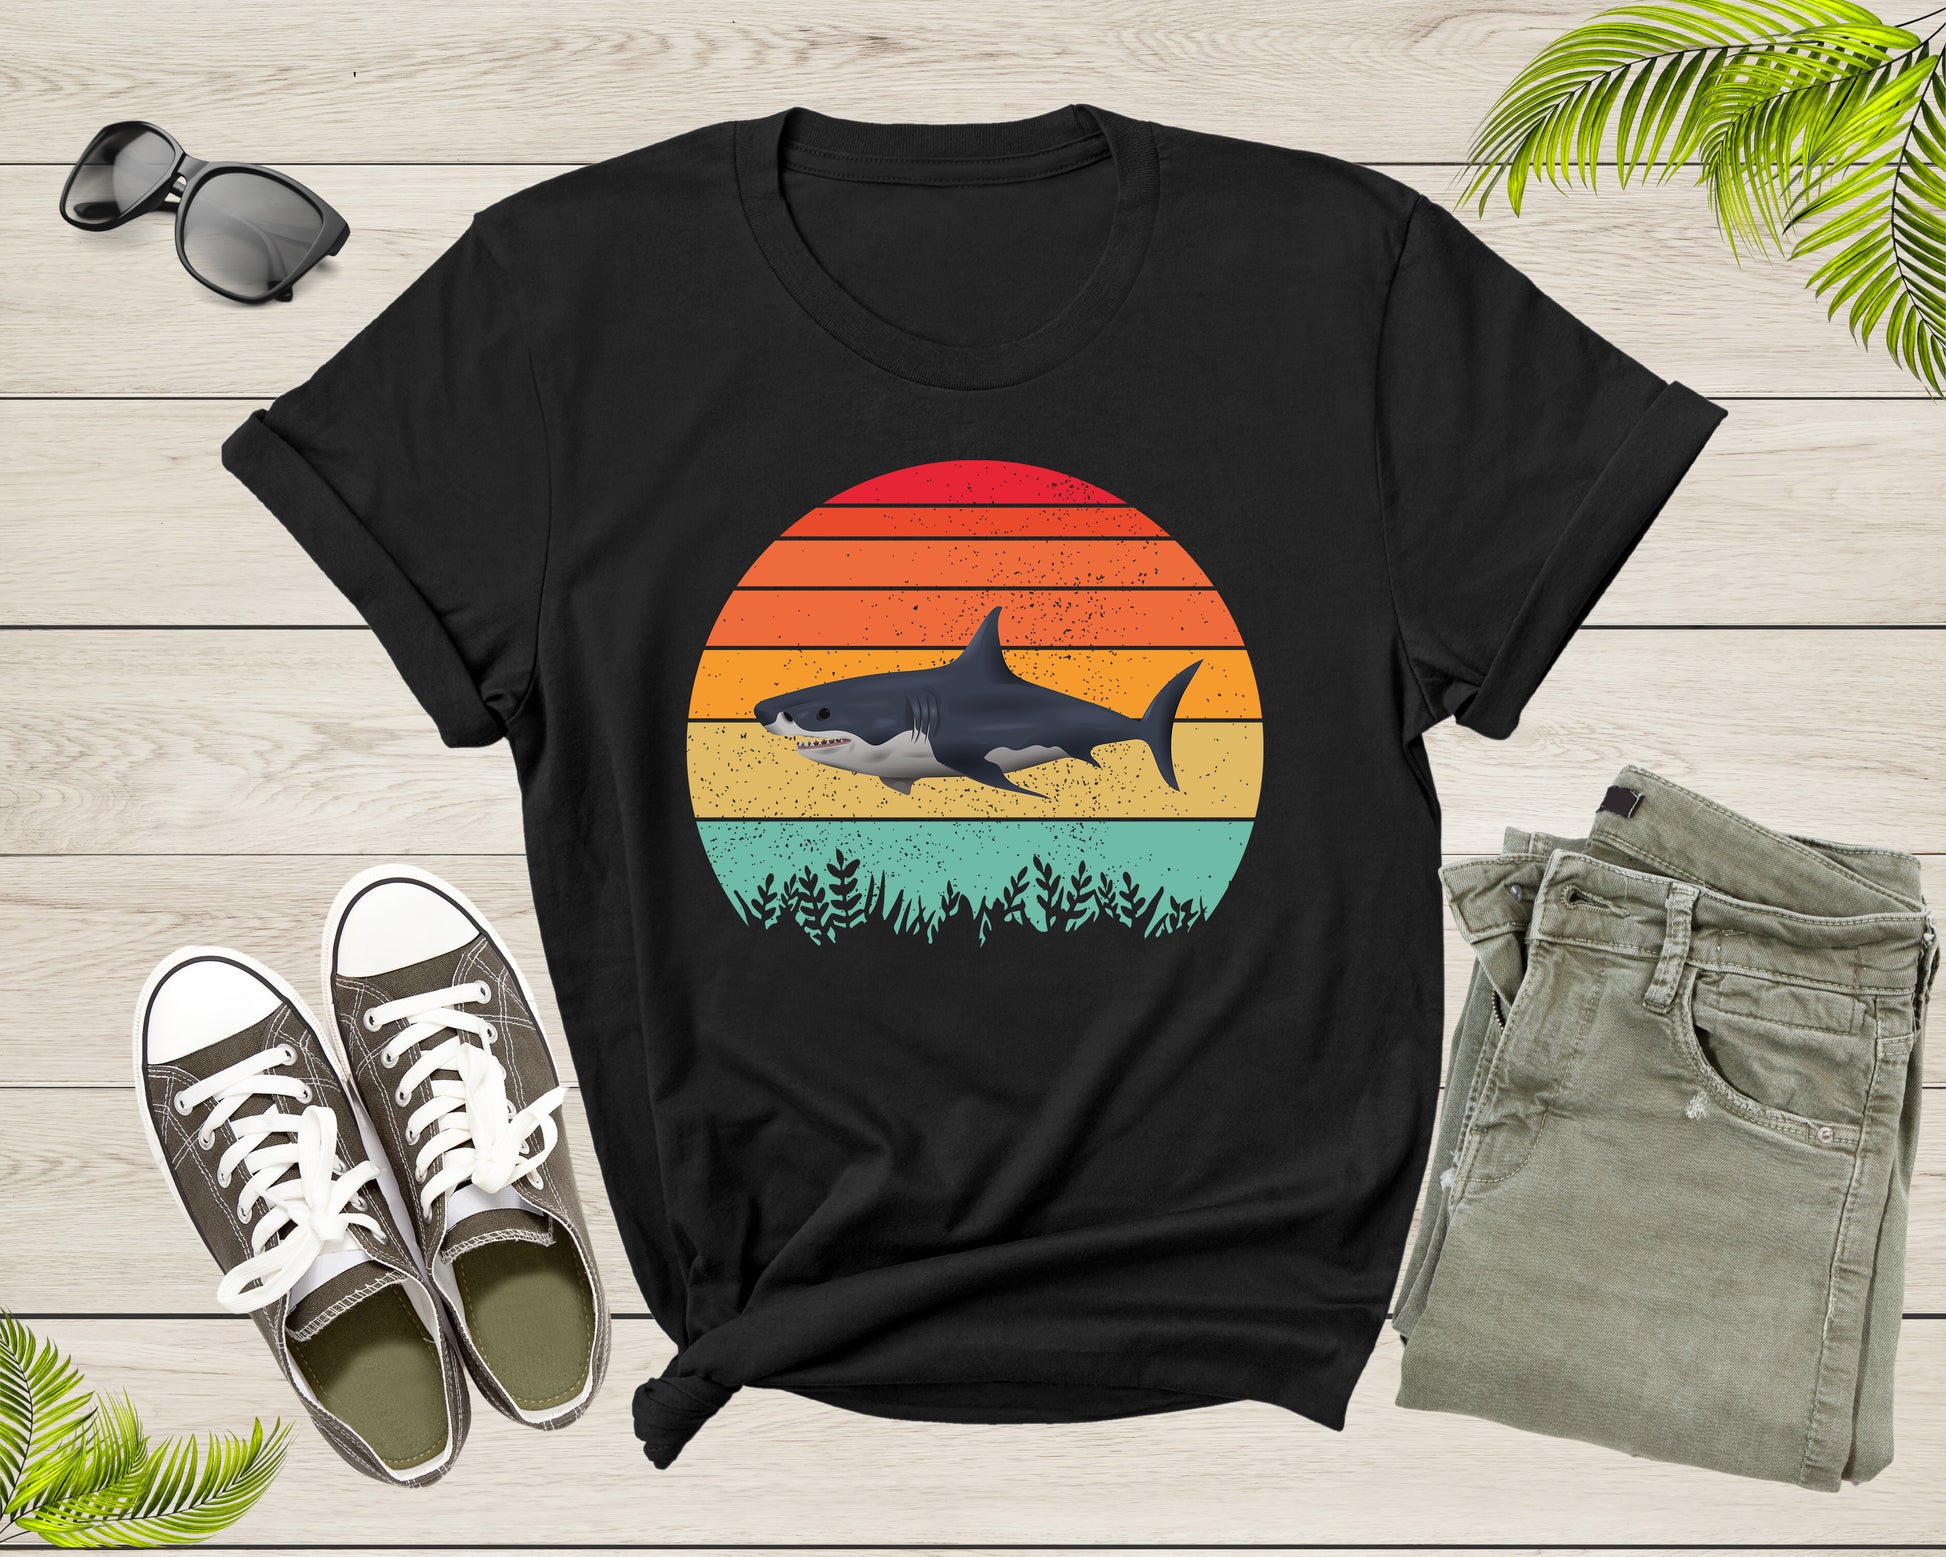 Retro Sunset Vintage Cute Shark Lover Fish Animal Lover Gifts Men Shirt T-Shirt Ocean Life Shirt Shark Birthday Shirt for Women Men Kids Black / 3XL